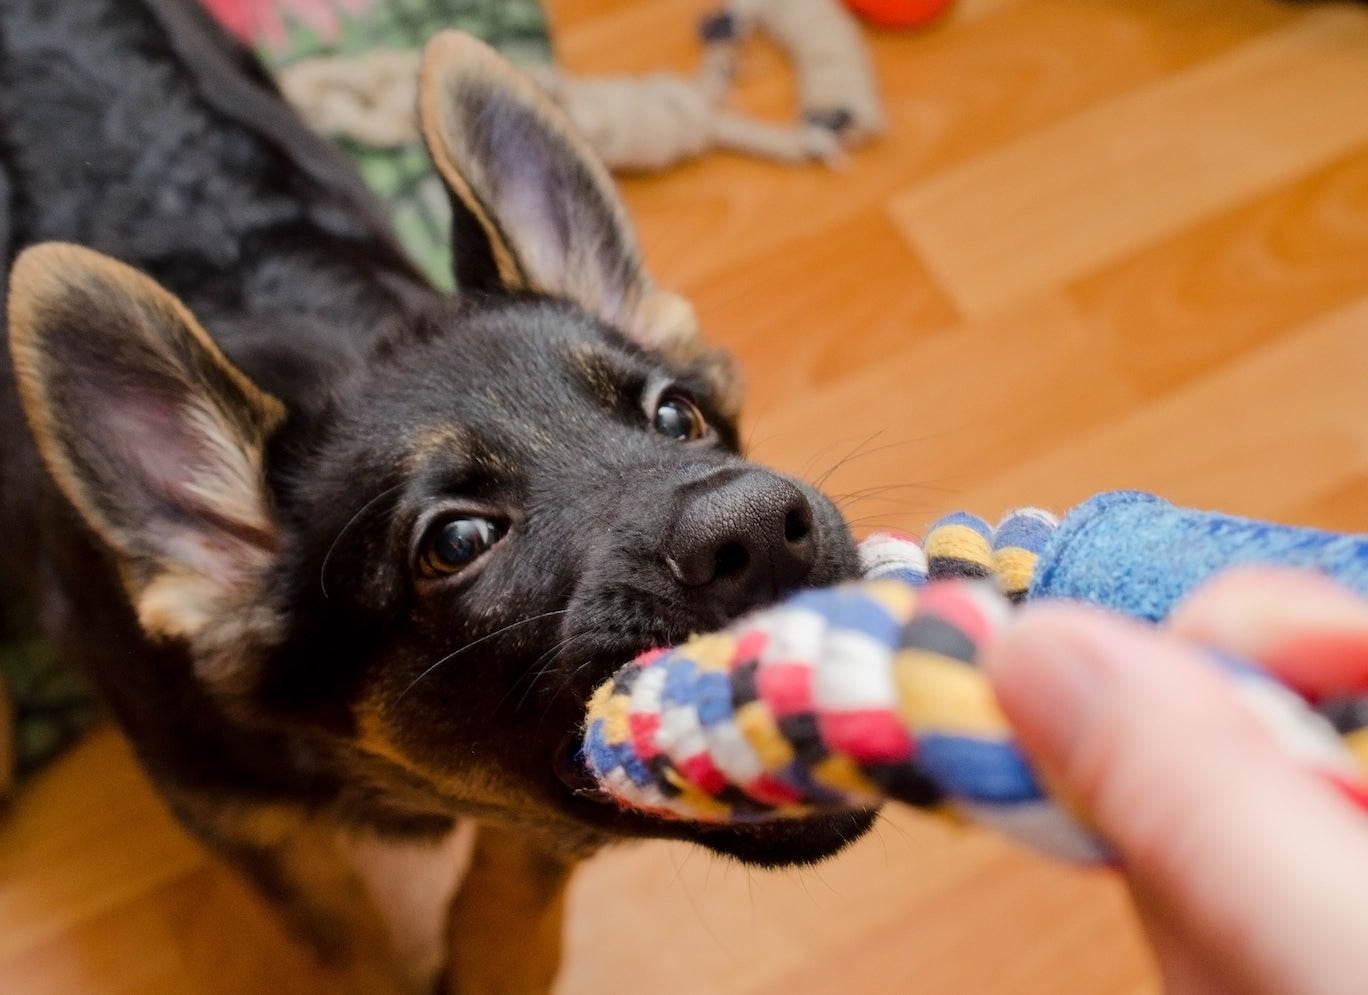 Dog Enrichment: Toys, Games, and DIY Ideas